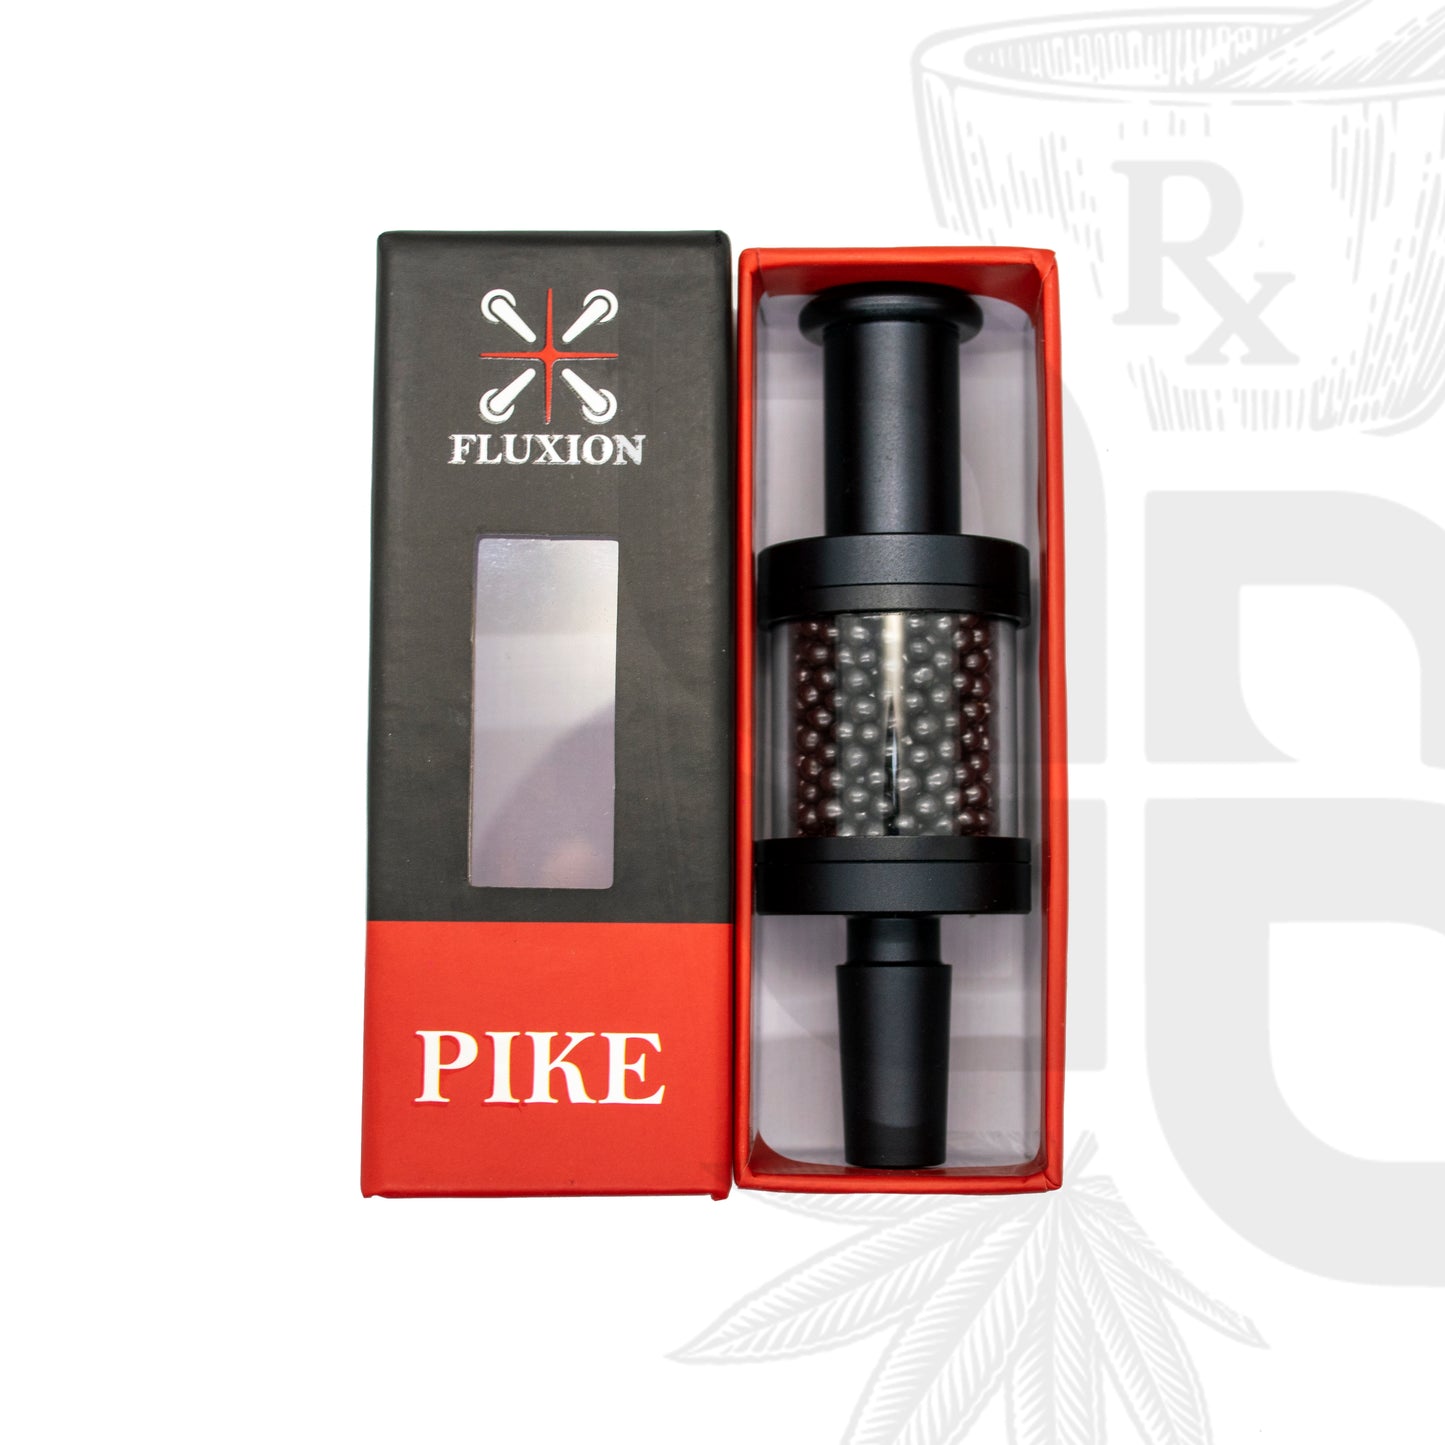 Flux - Pike Filter